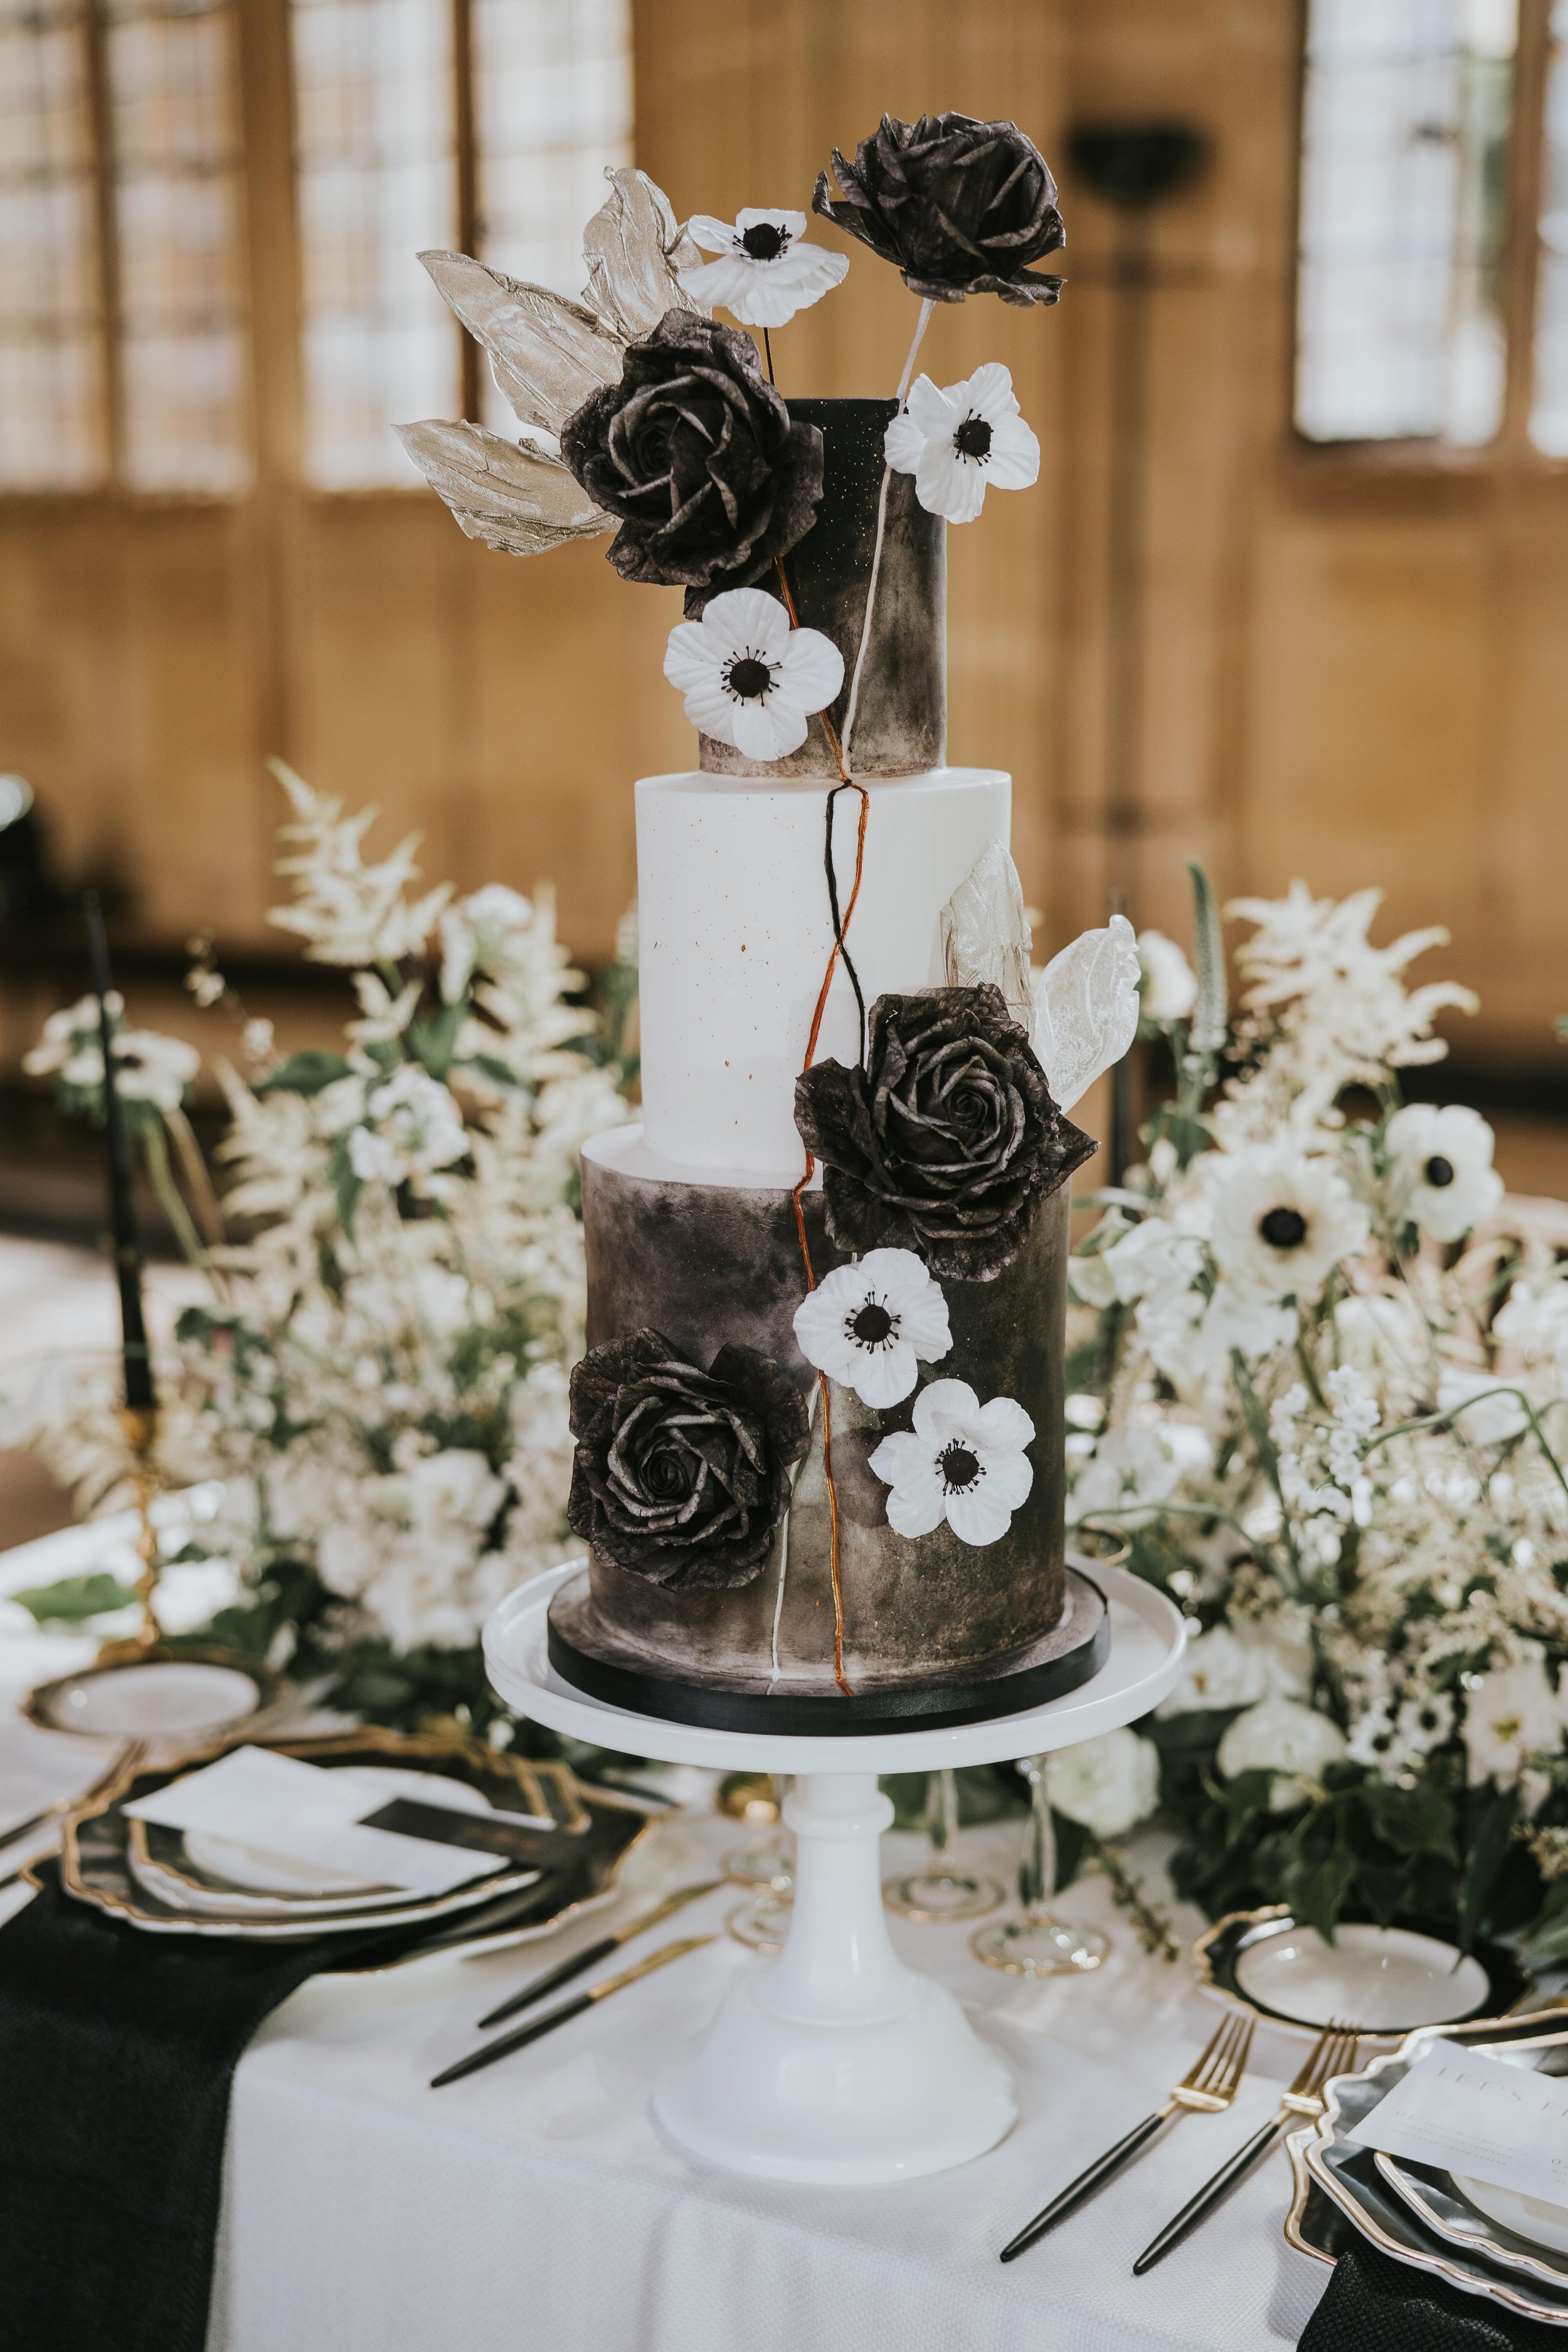 Contemporary black and white wedding cake